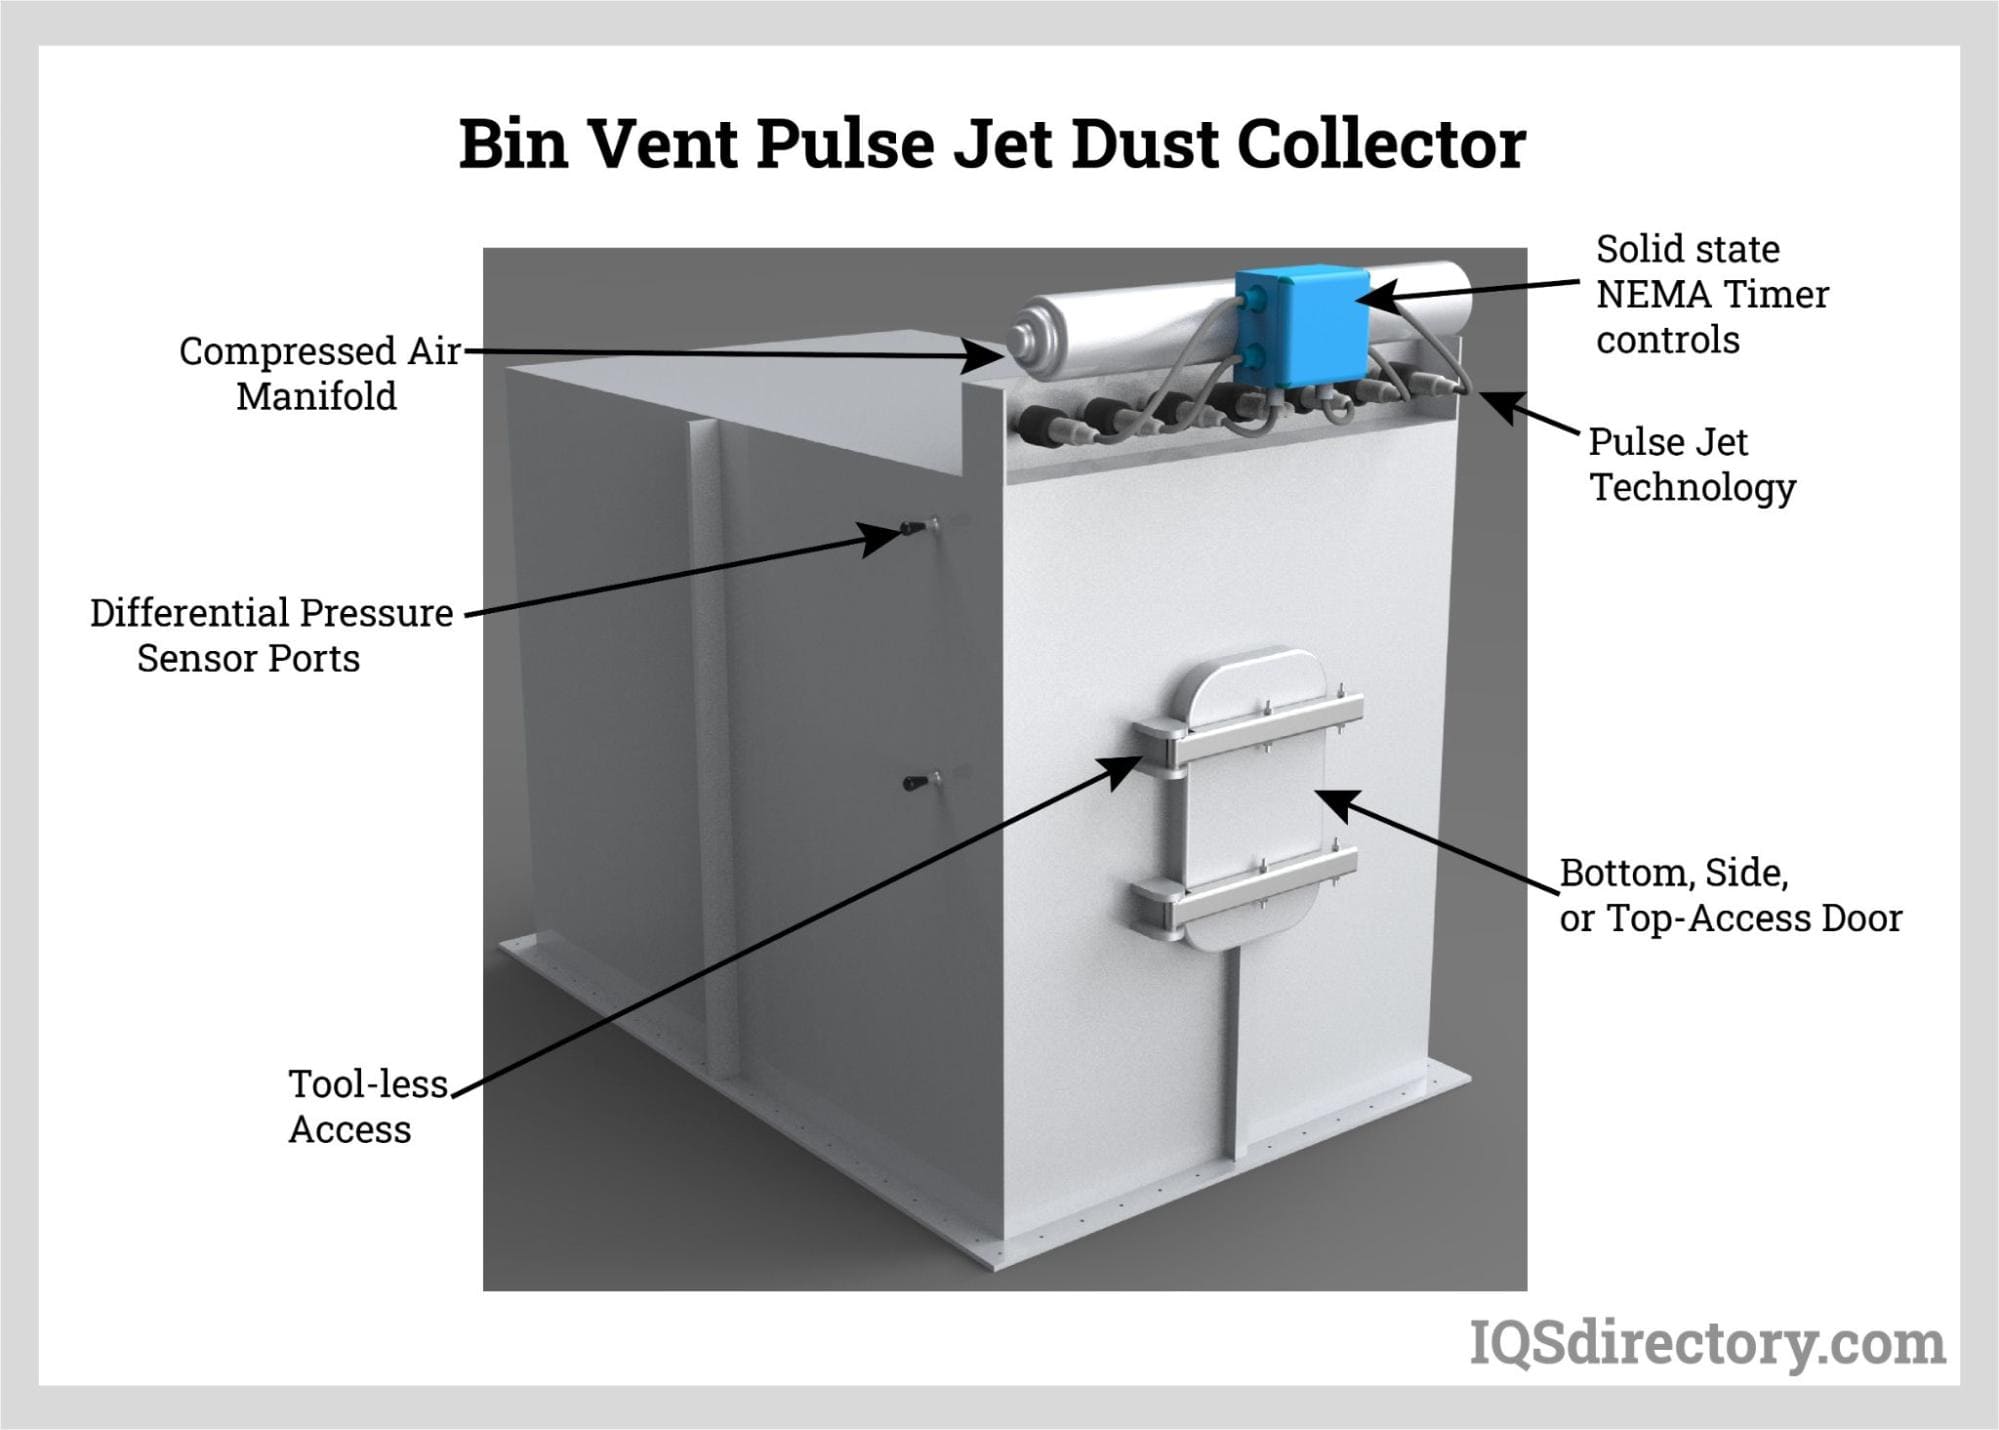 Bin Vent Pulse Jet Dust Collector